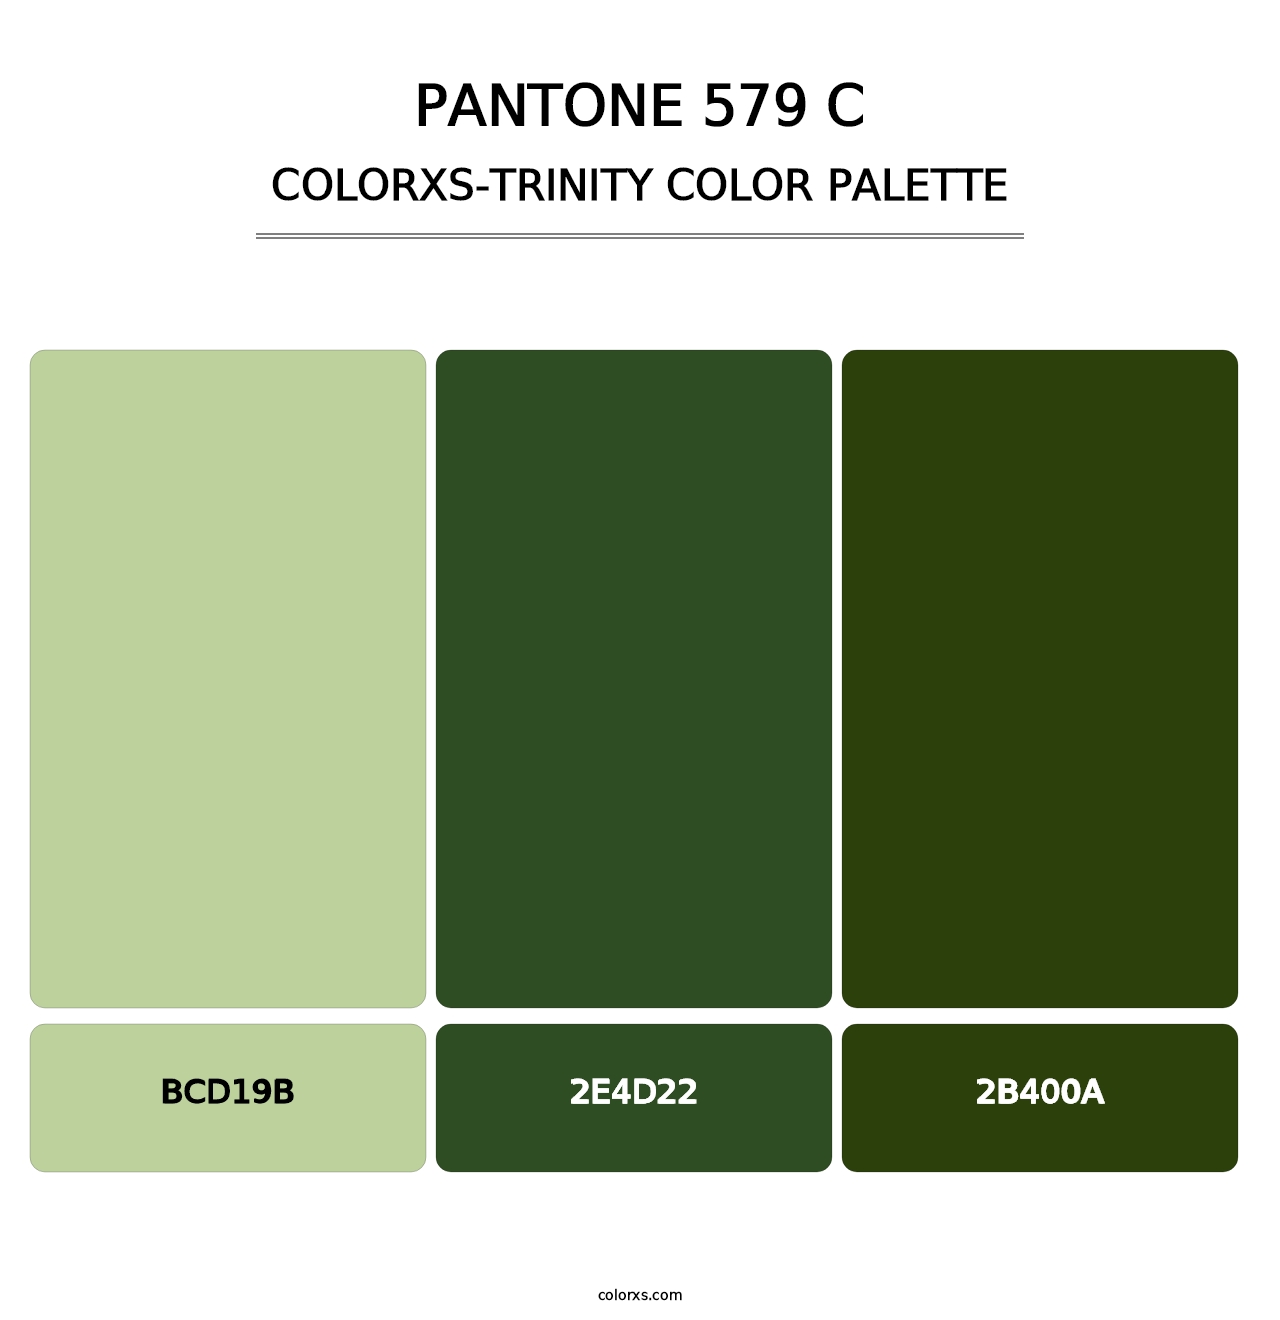 PANTONE 579 C - Colorxs Trinity Palette